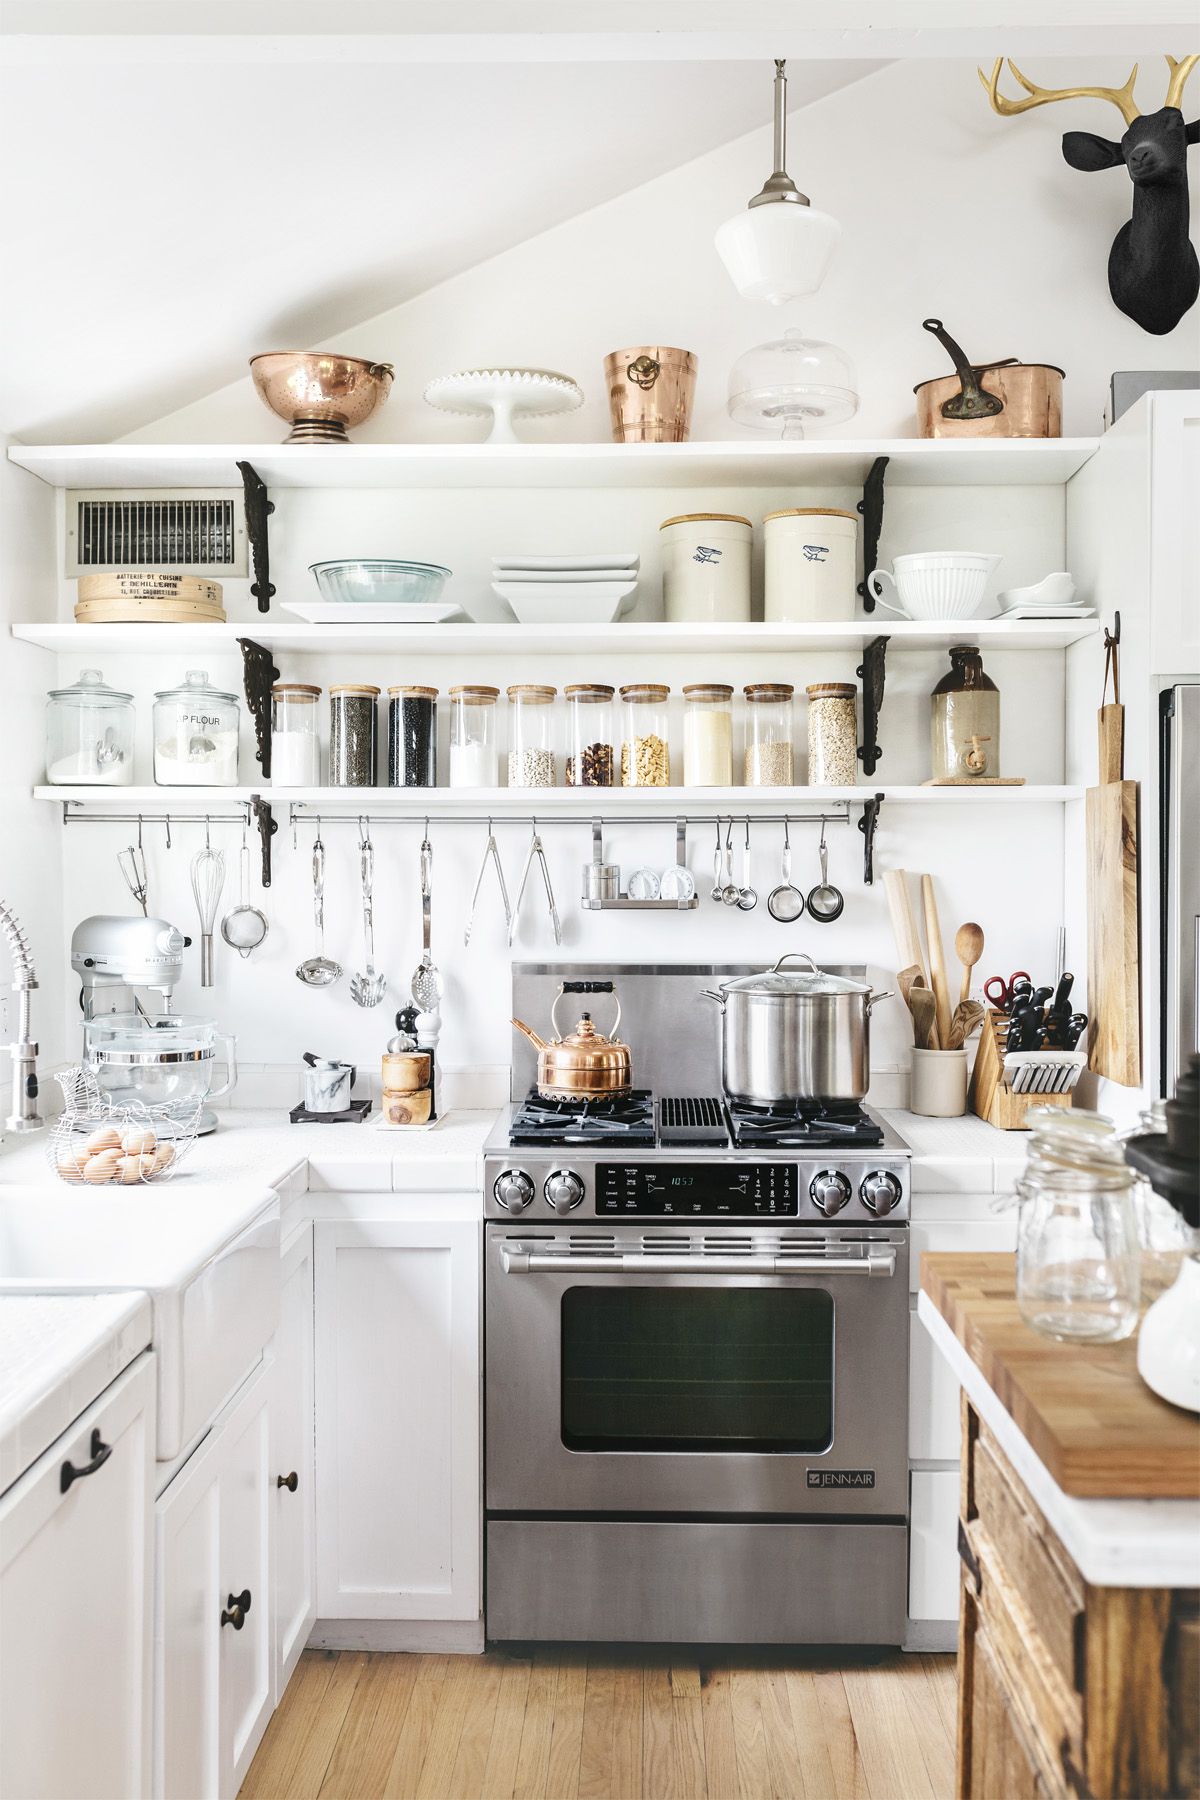 24 Best White Kitchens - Pictures of White Kitchen Design Ideas